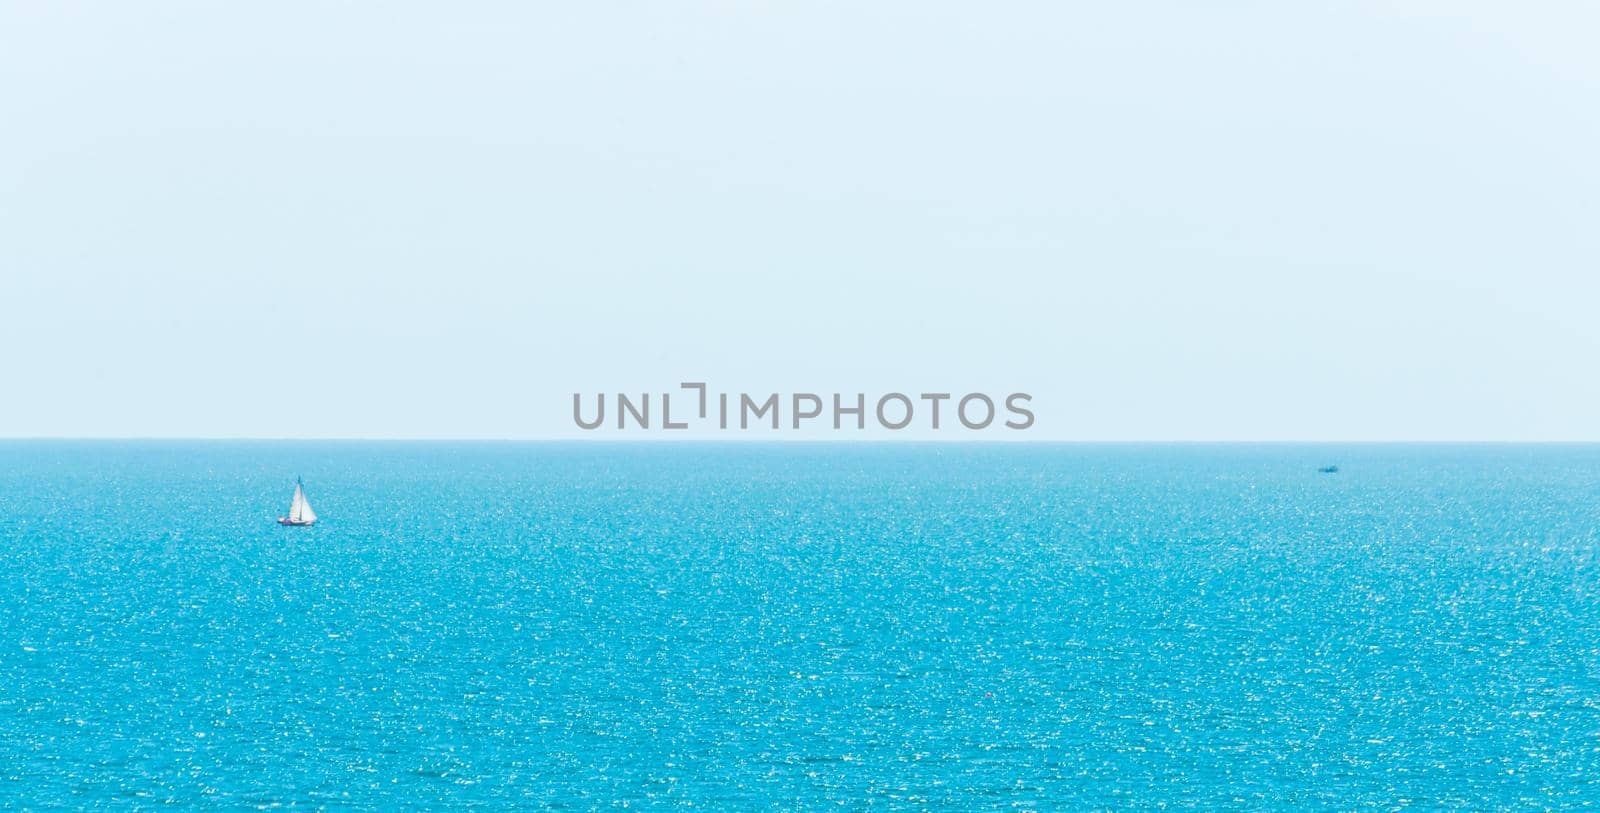 Ocean infinity, yacht sailing the ocean, clear sky, blue water, recreational sport